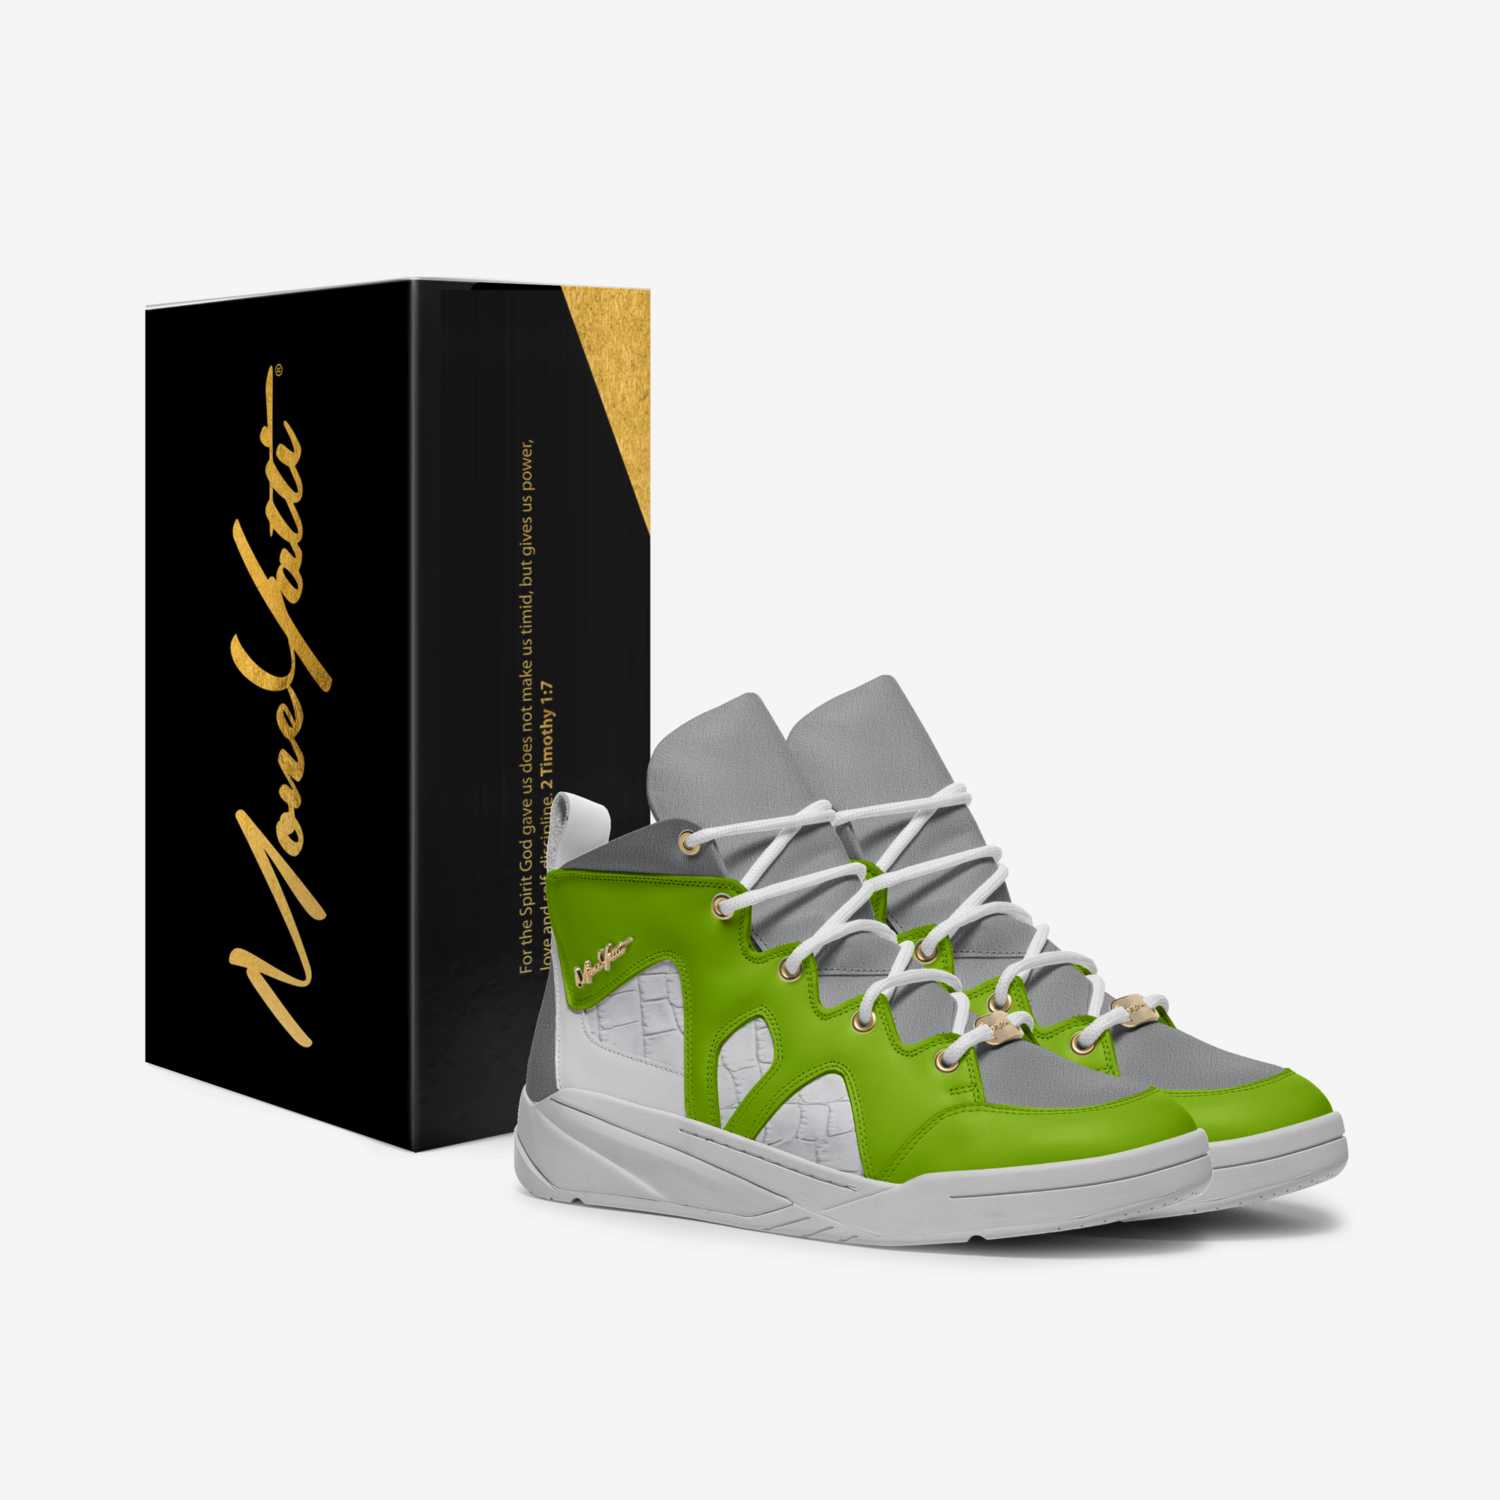 MONEYATTI TAKEOFF 001 custom made in Italy shoes by Moneyatti Brand | Box view